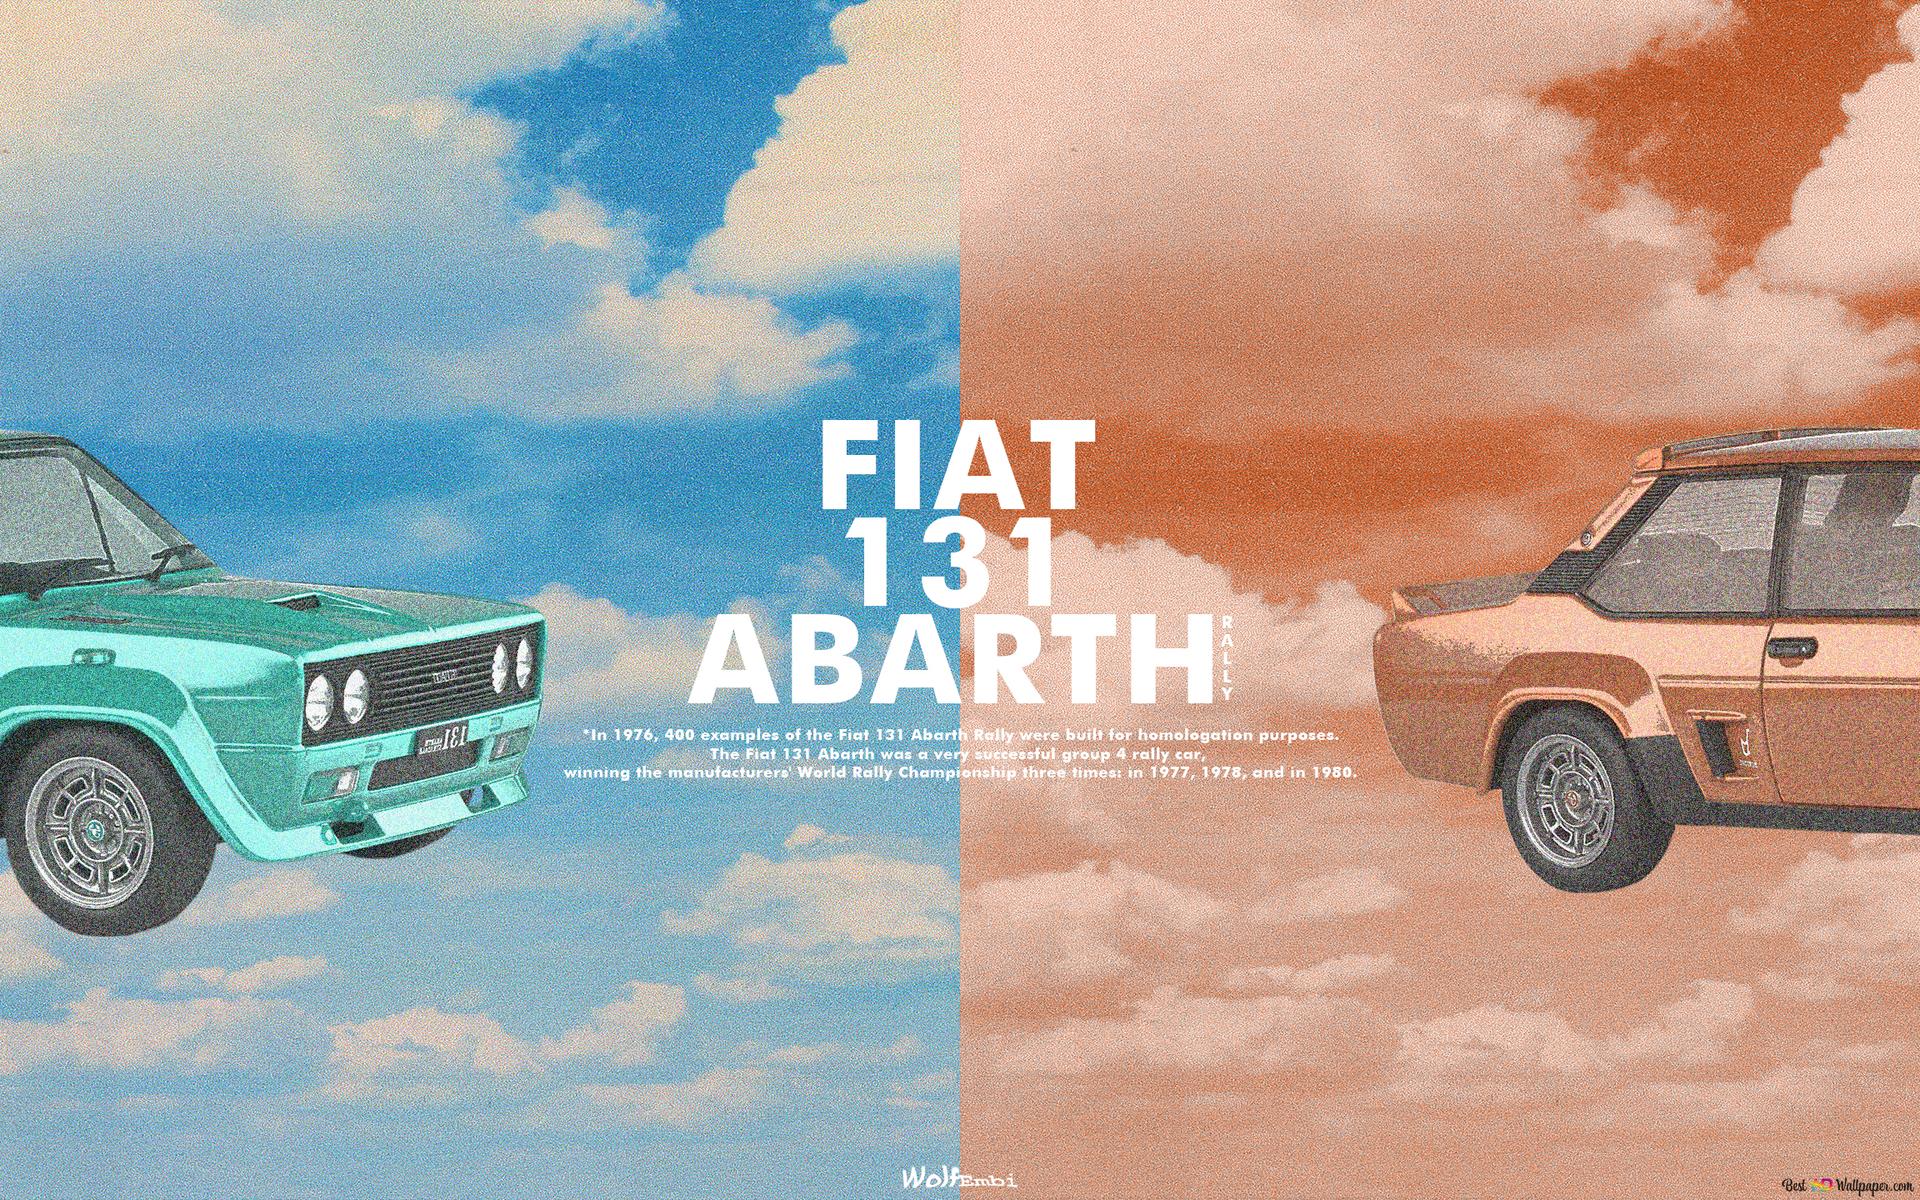 Fiat 131 Abarth 2K wallpaper download